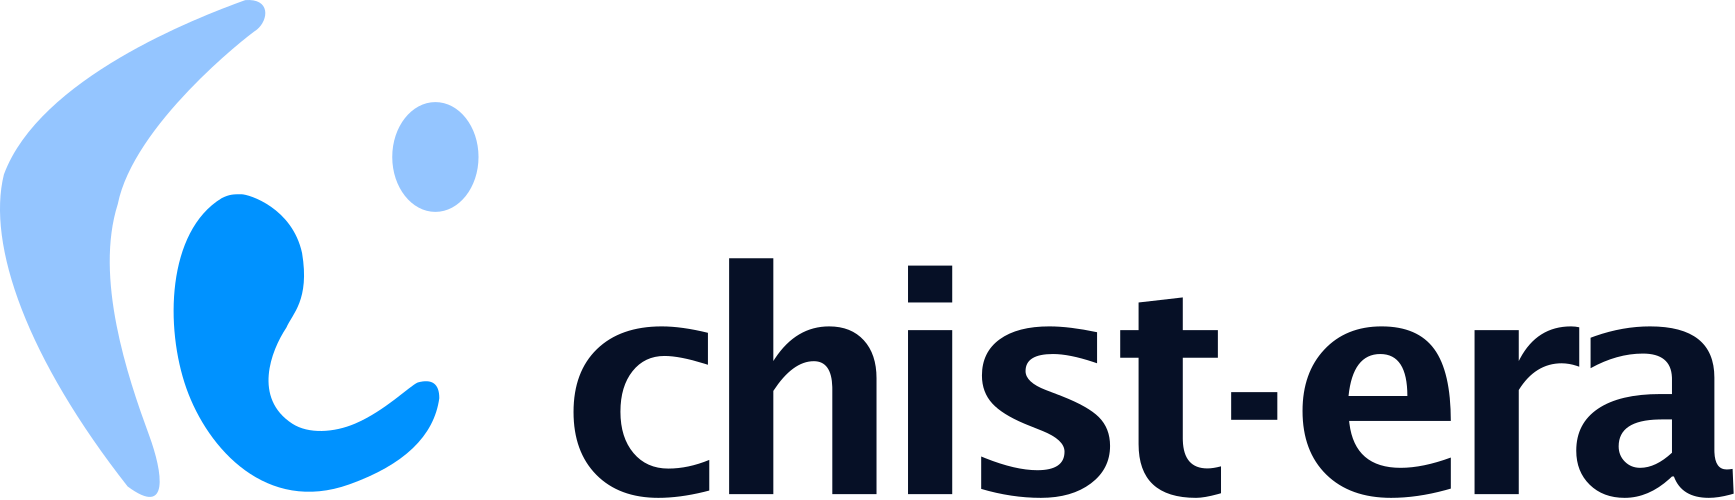 Logo Chist-Era